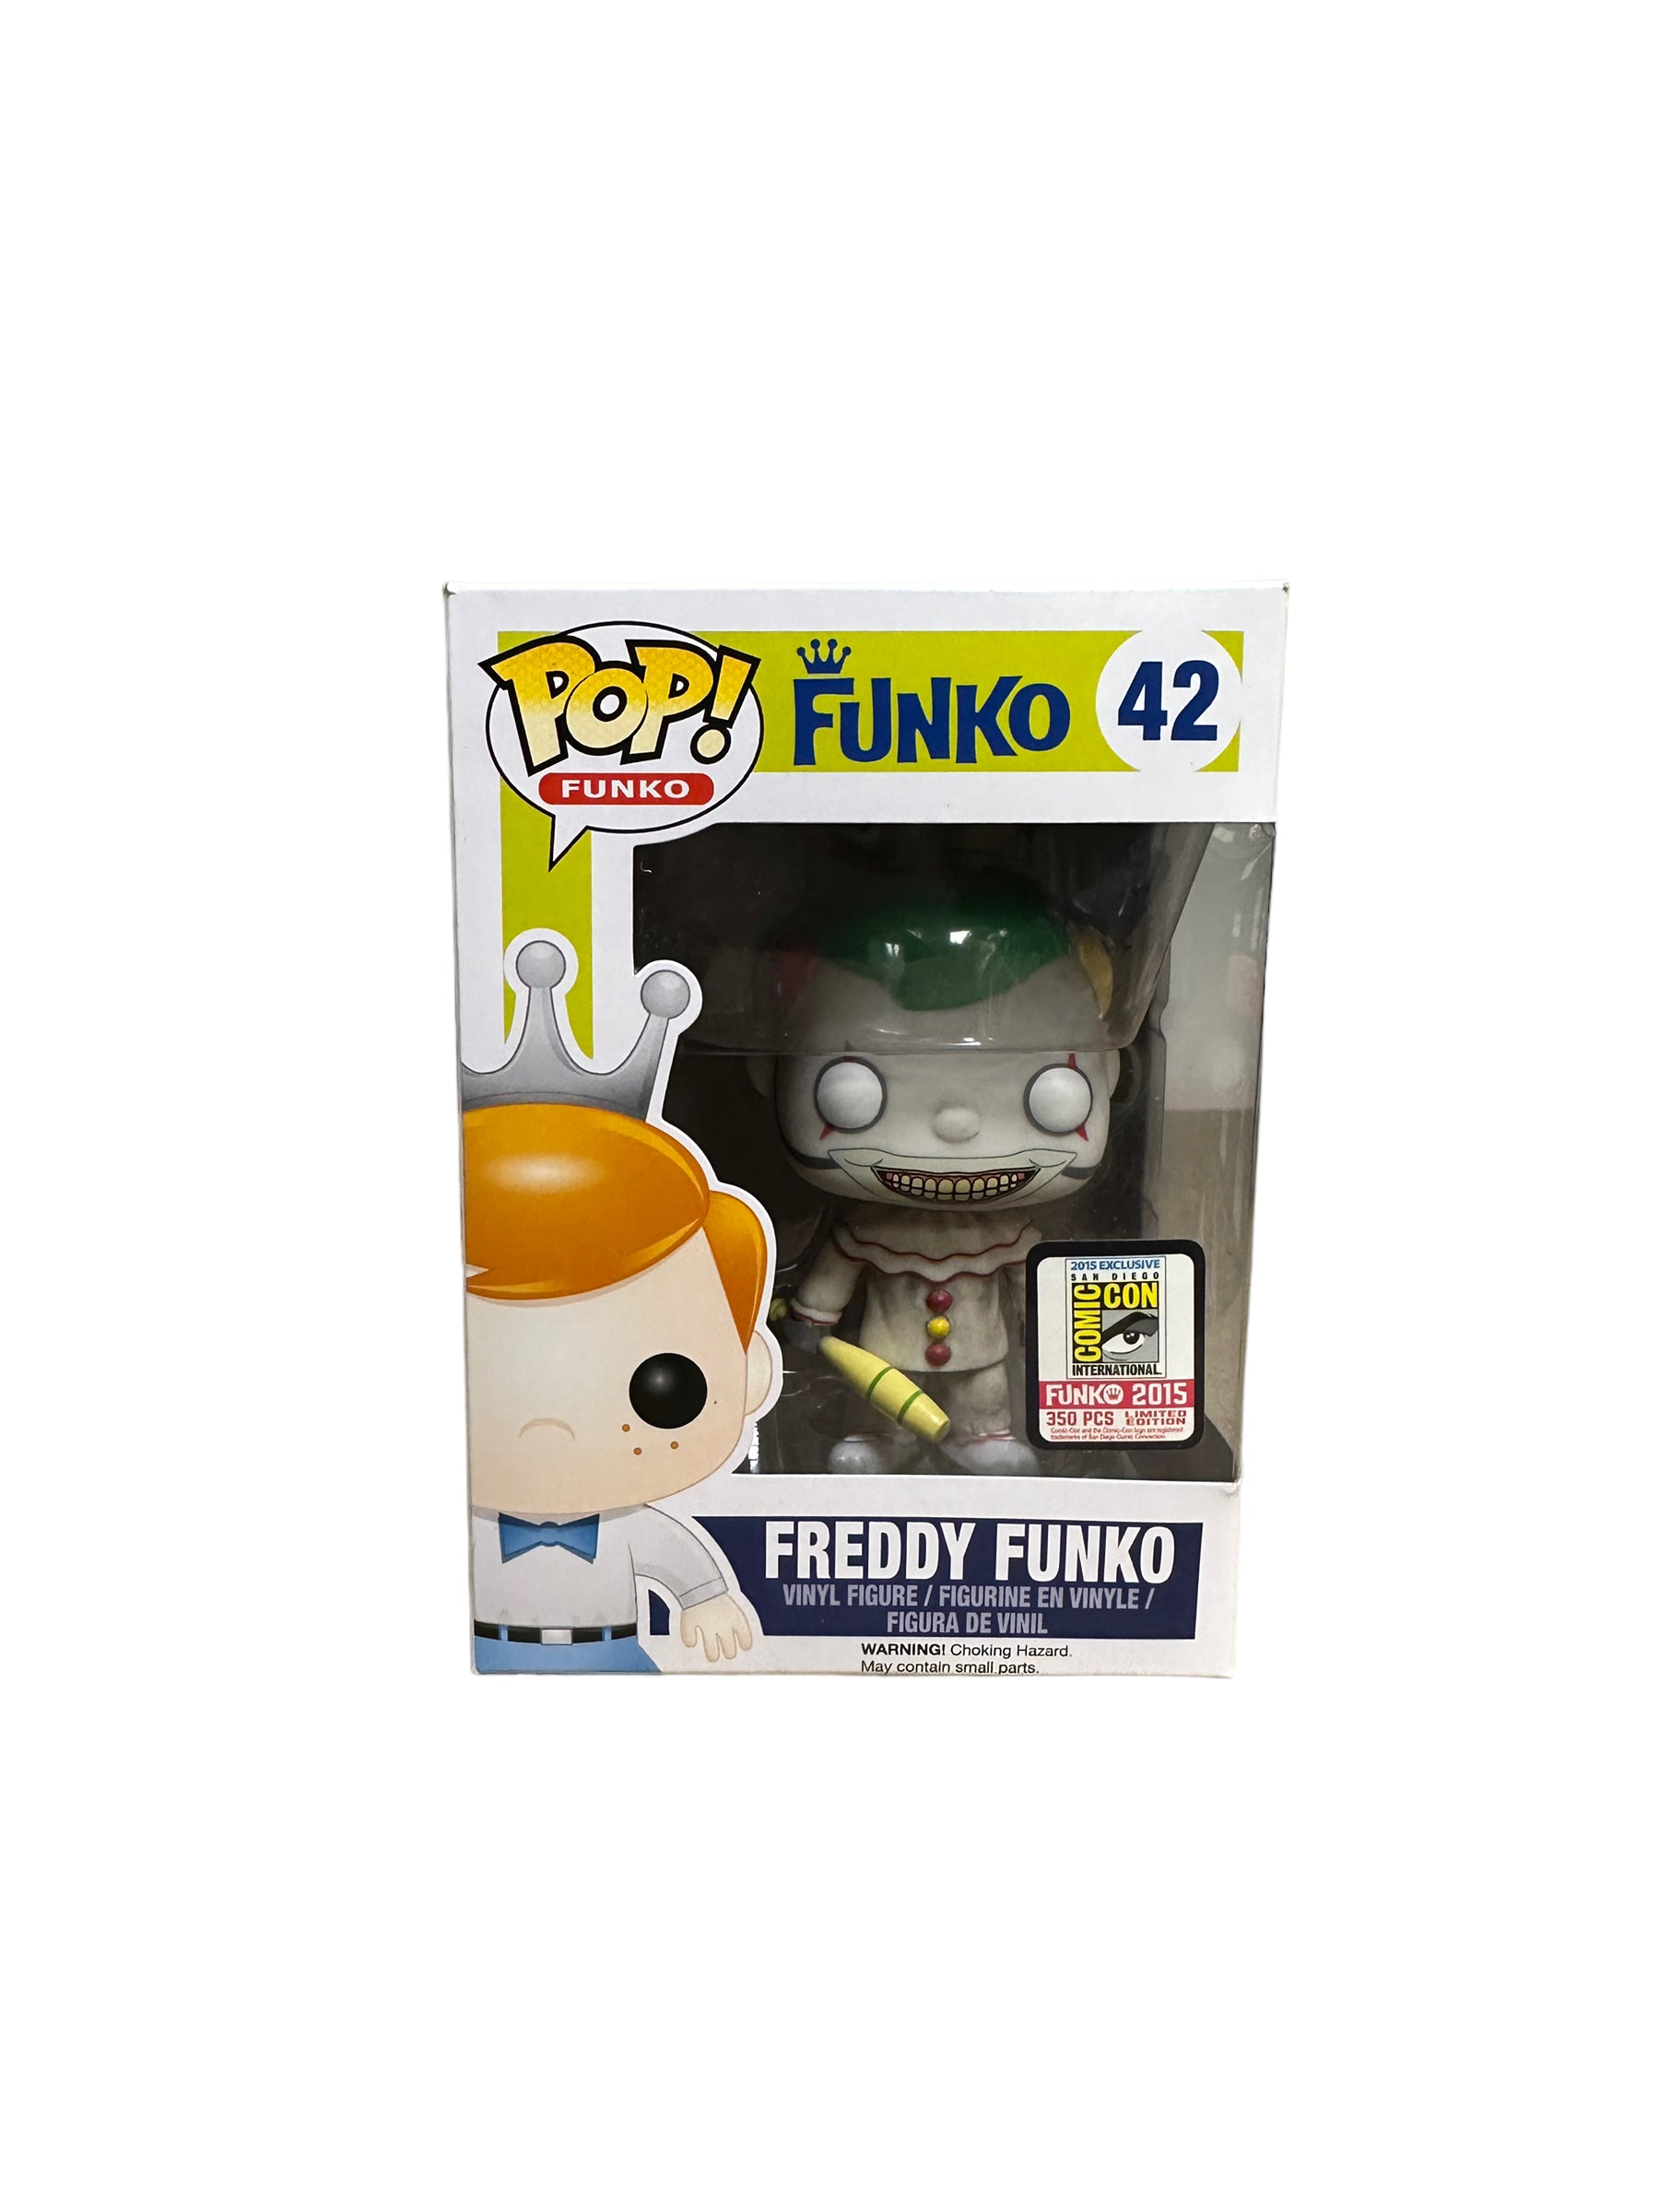 Freddy Funko as Twisty #42 Funko Pop! - SDCC 2015 Exclusive LE350 Pcs - Condition 8.75/10